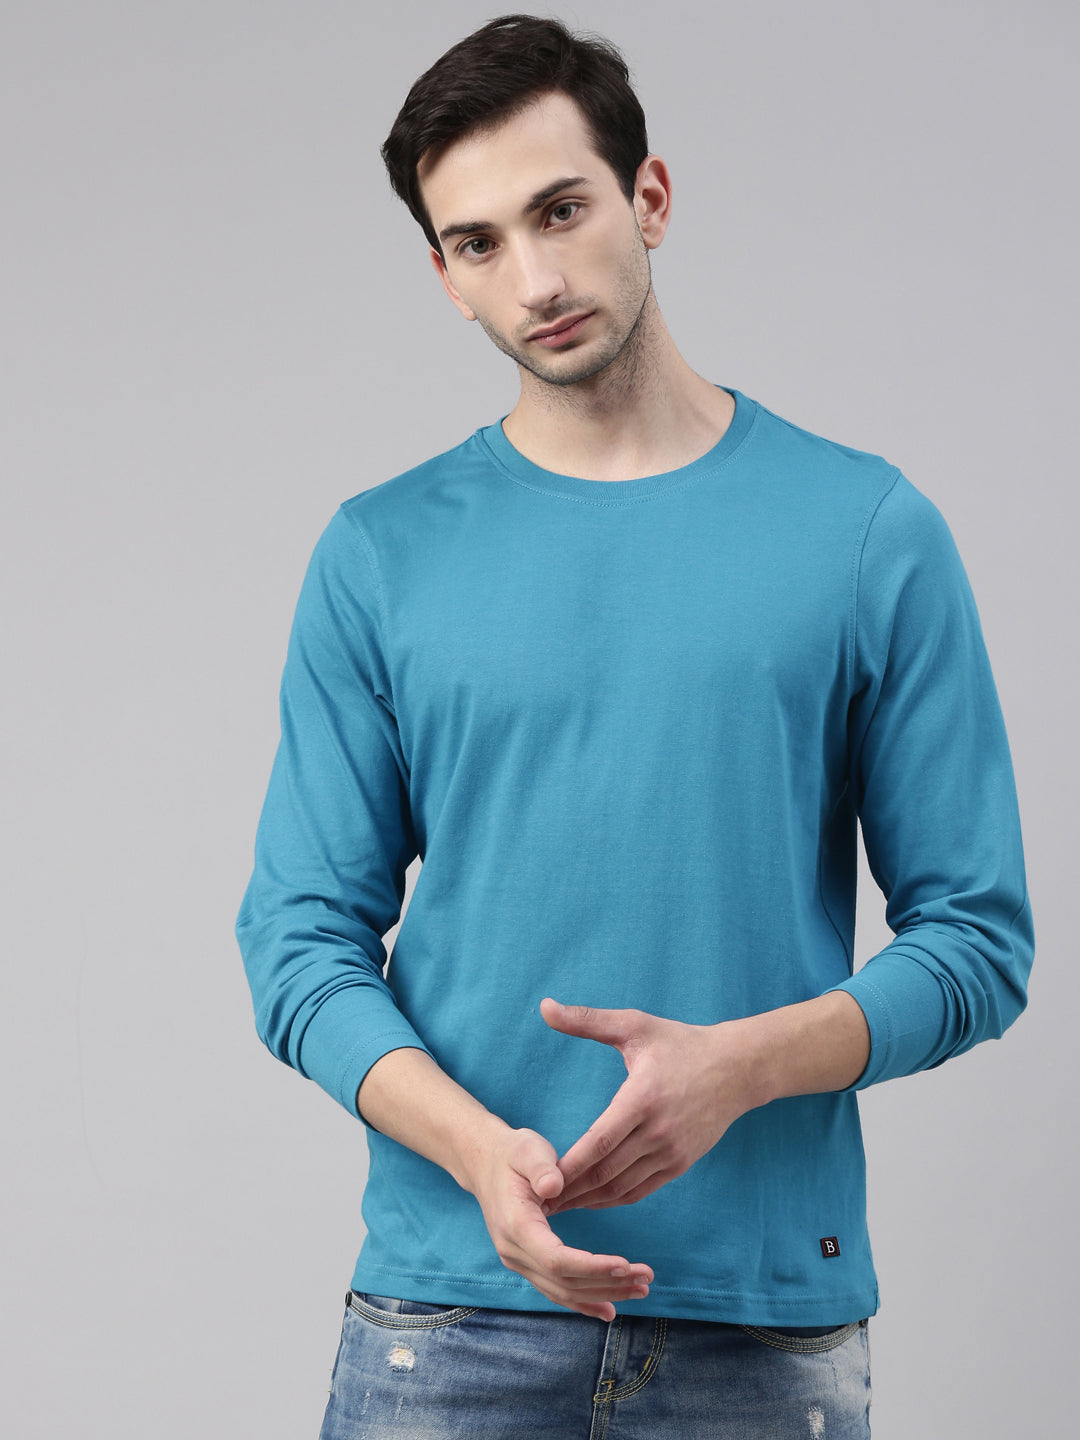 Teal Blue Solid Full Sleeves T-Shirt Full Sleeves Bushirt   